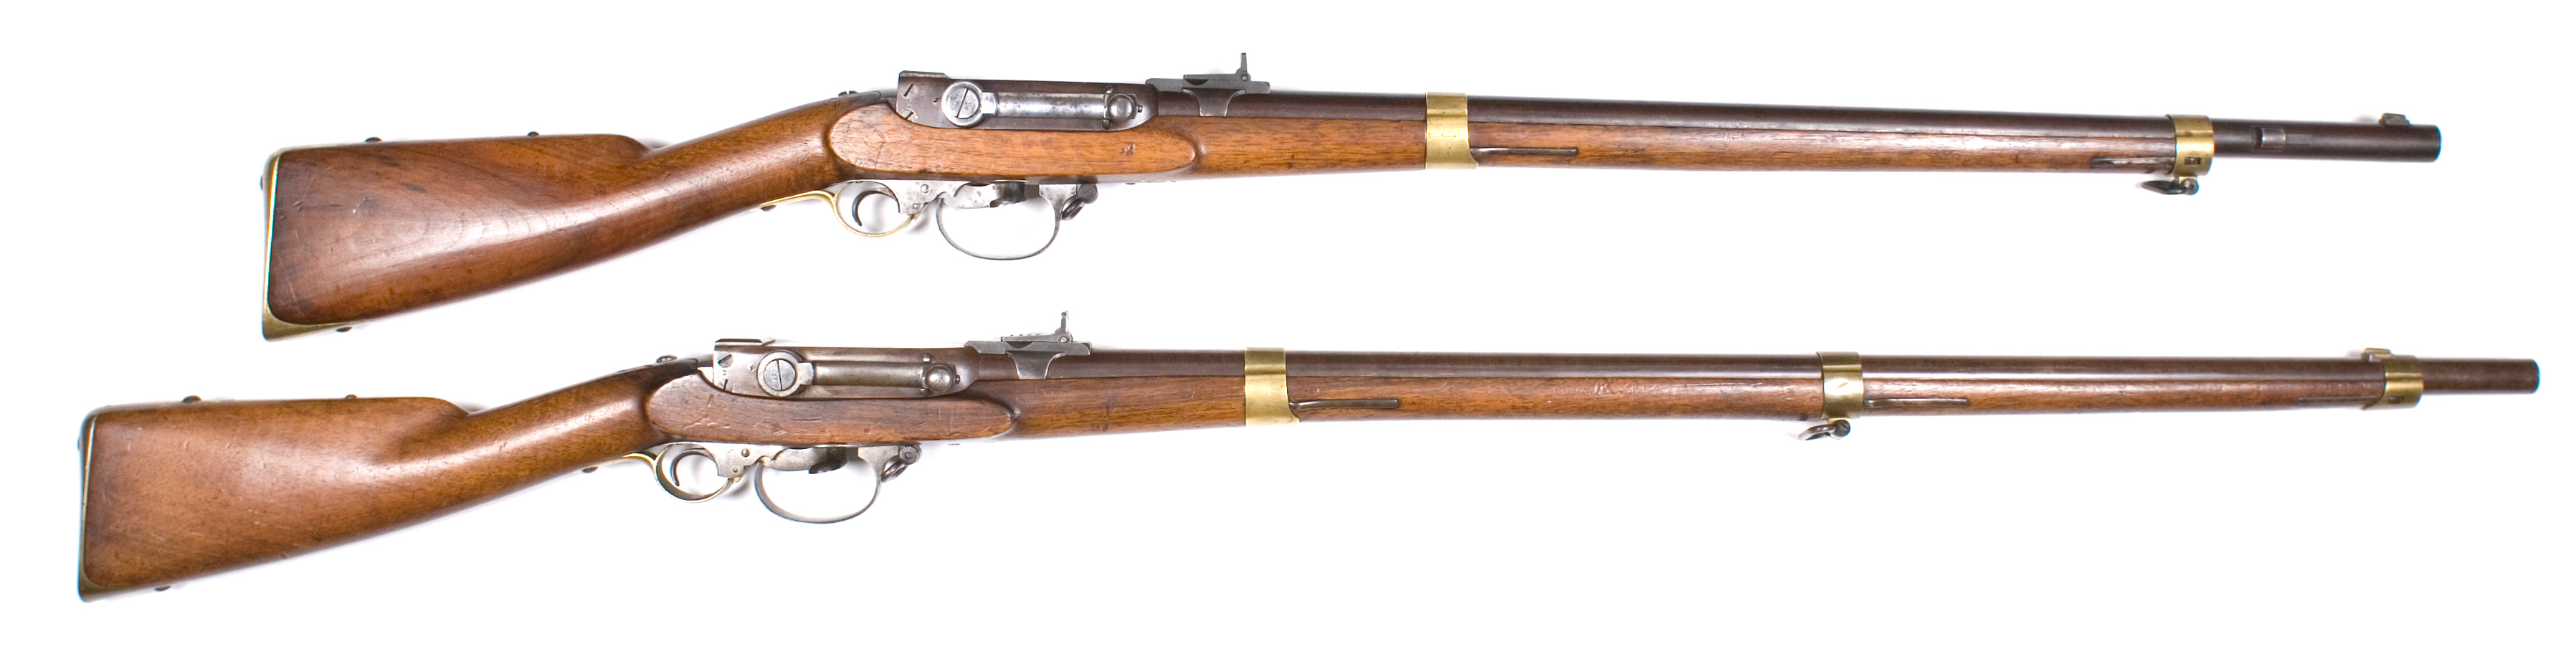 ./guns/rifle/bilder/Rifle-Herzberg-Kammerlader-M1849-55-59-1935-17.jpg